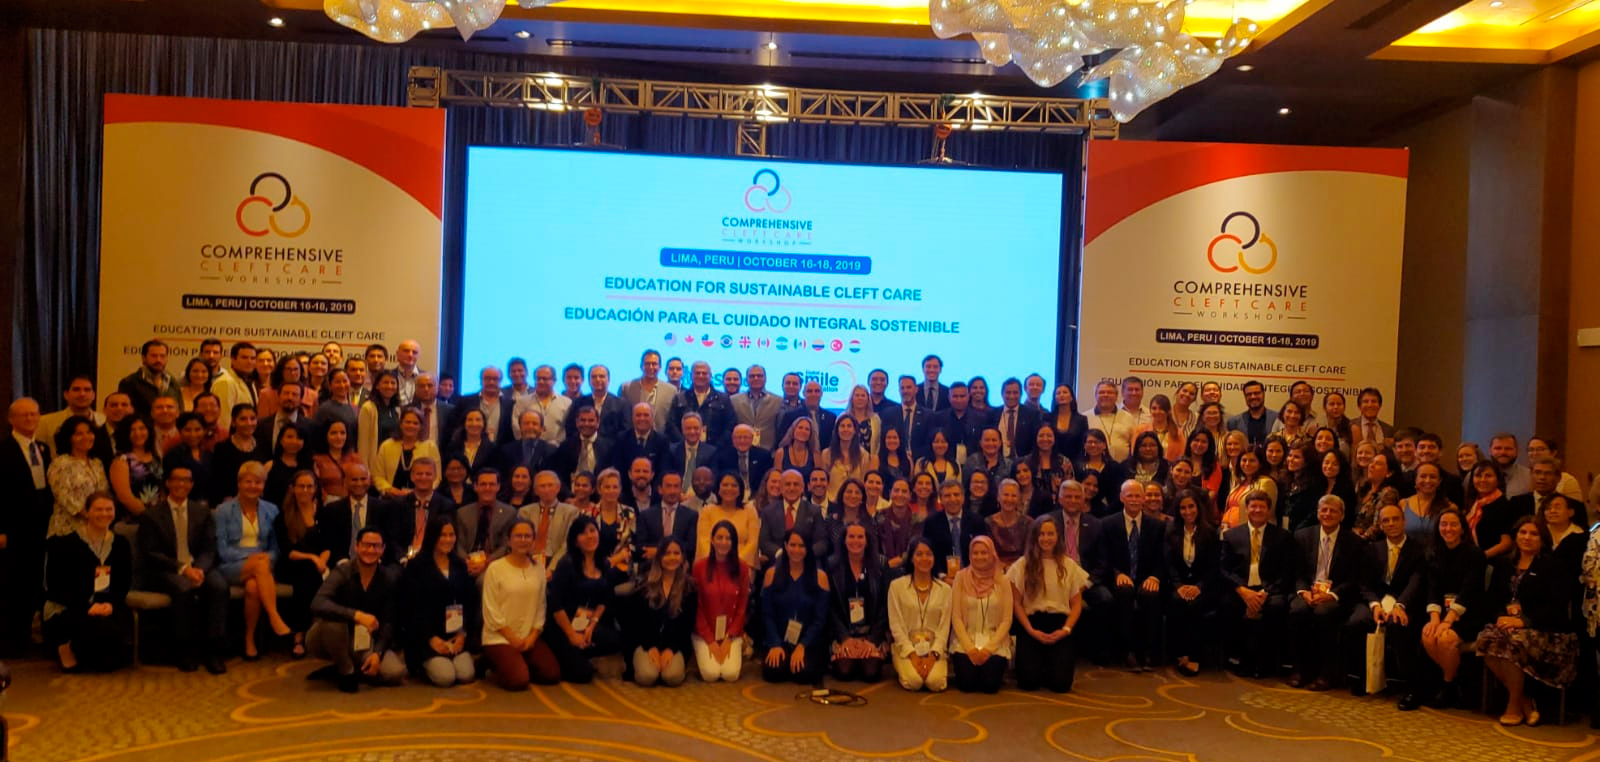 2019 International Comprehensive Cleft Care Workshop (CCCW), Lima, Perú